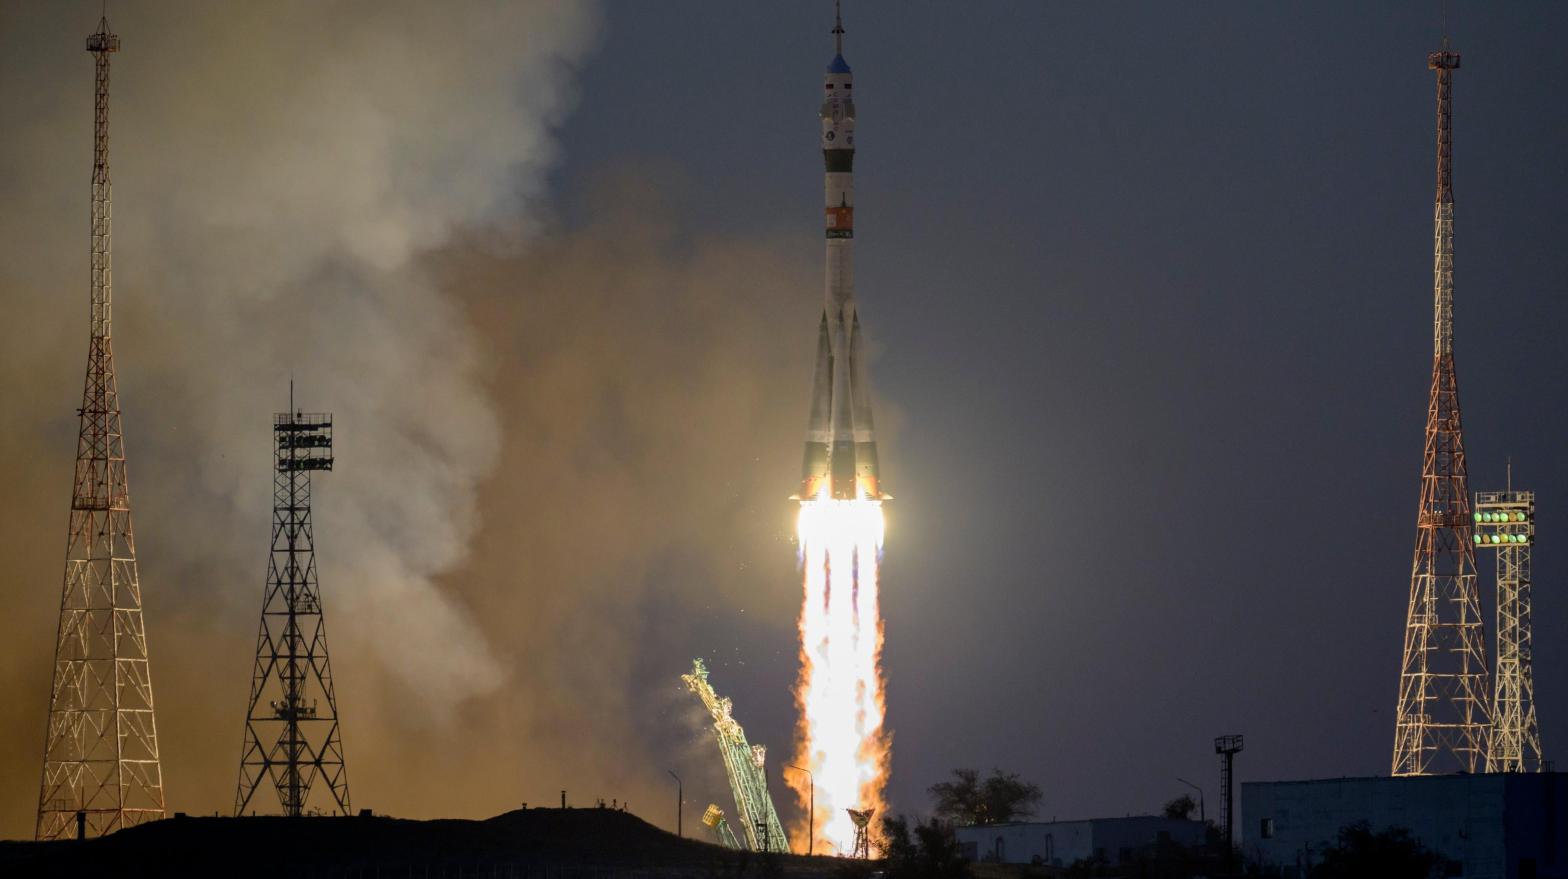 The Soyuz rocket took off from the Baikonur Cosmodrome in Kazakhstan. (Photo: NASA/Bill Ingalls)